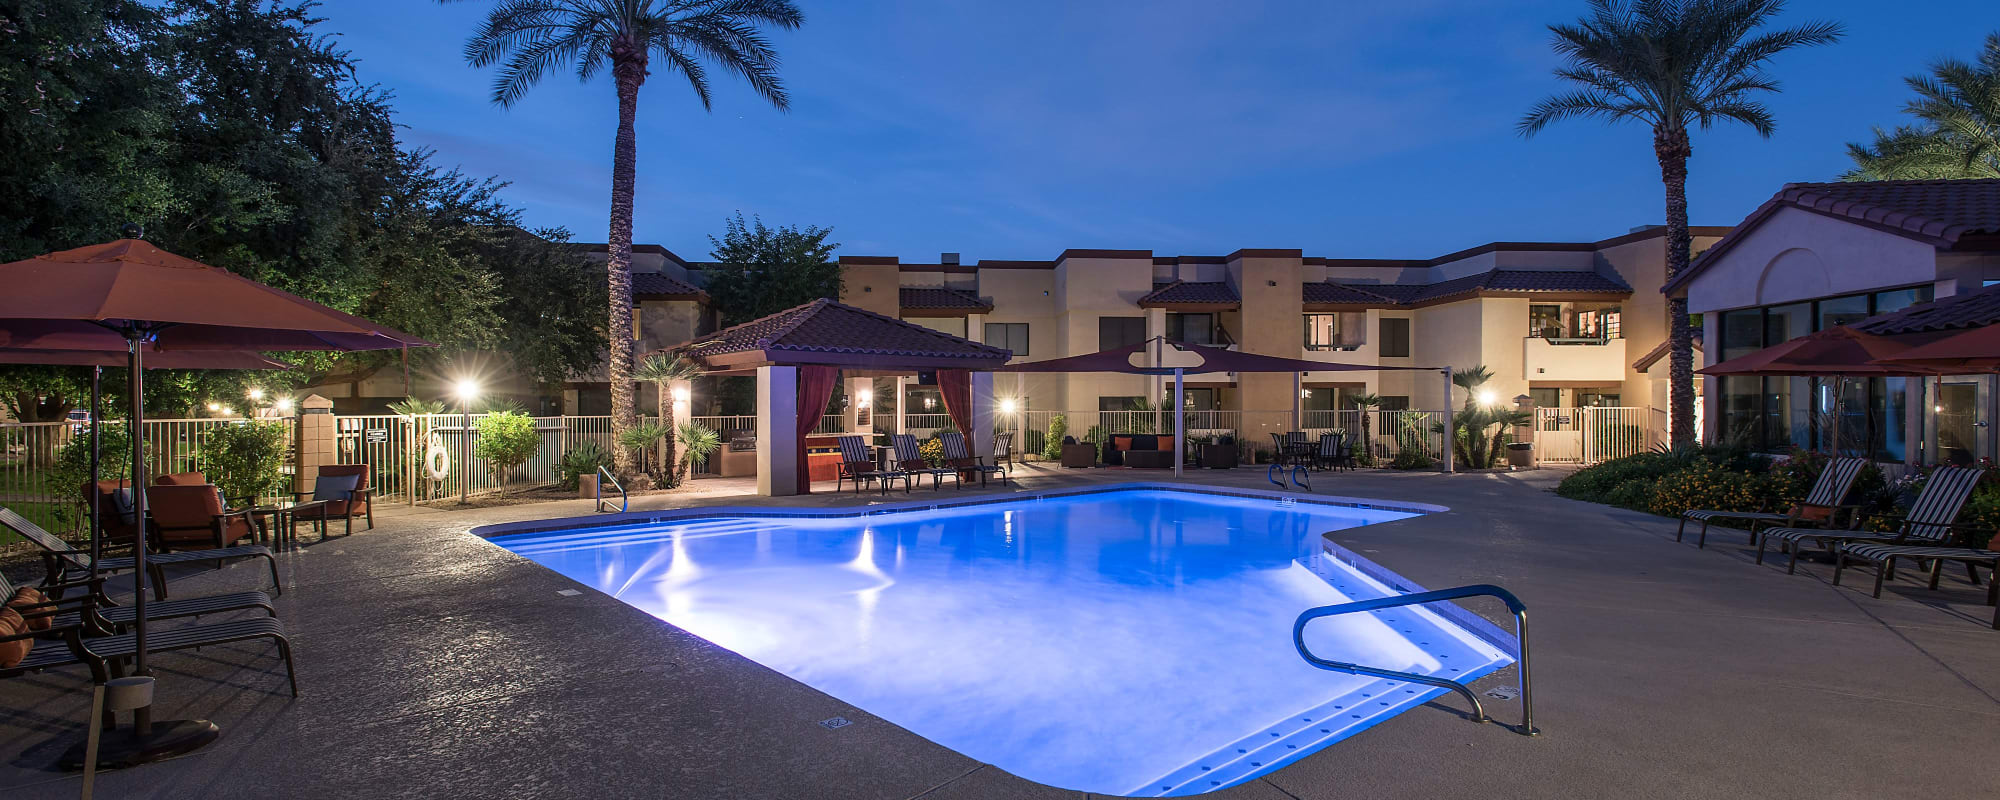 Apartments at Scottsdale Highlands Apartments in Scottsdale, Arizona